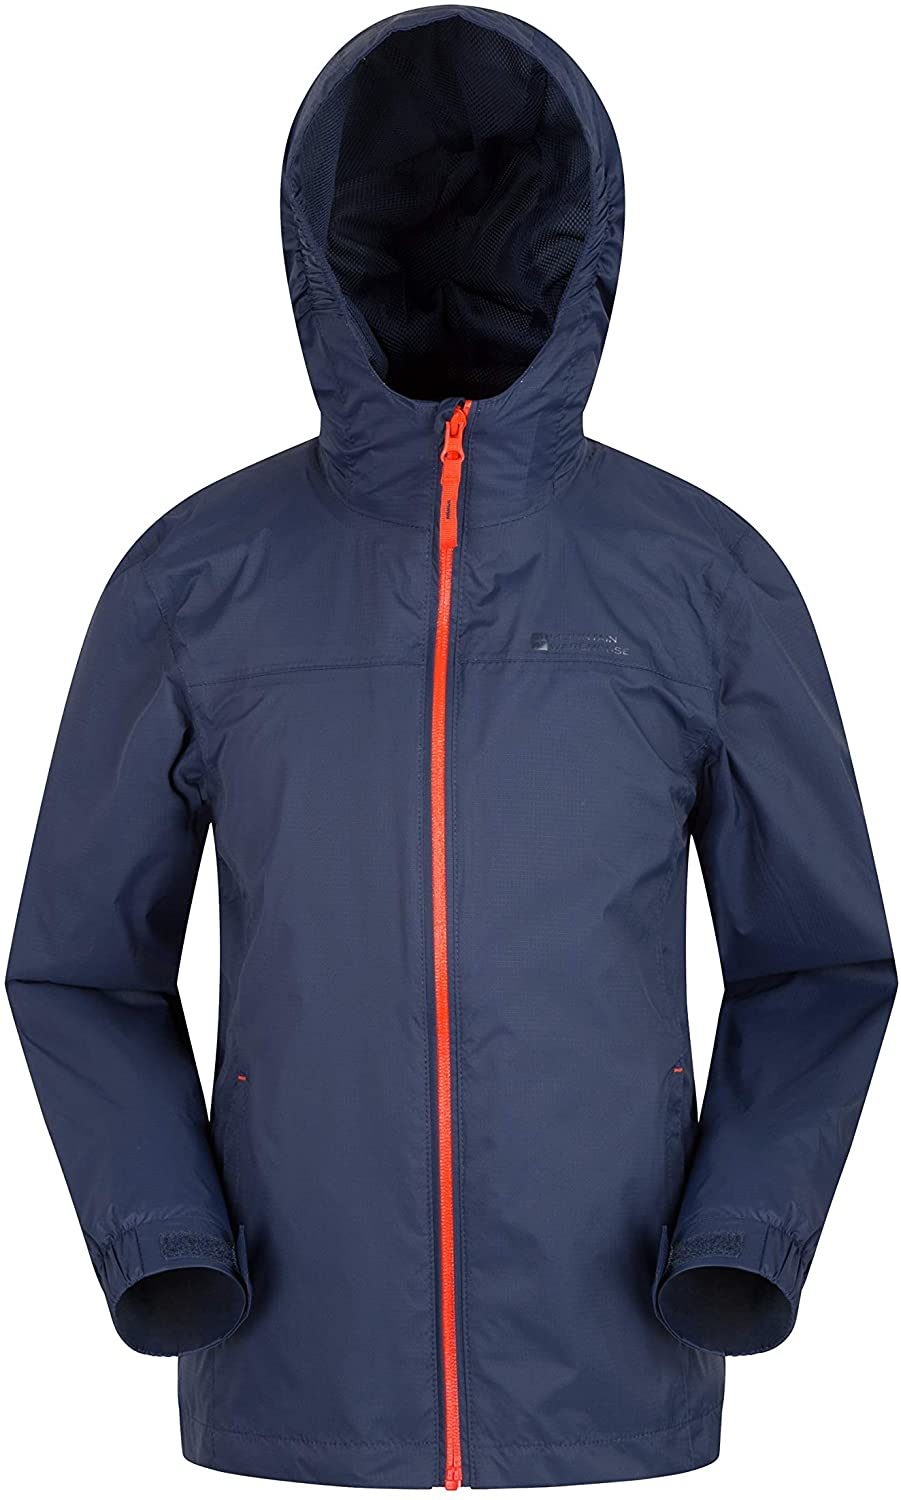 Kids Waterproof Rain Jacket - Taped Seams Raincoat, Lightweight, Breathable, Girls & Boys Rainwear -Ideal for Travelling, Wet Weather